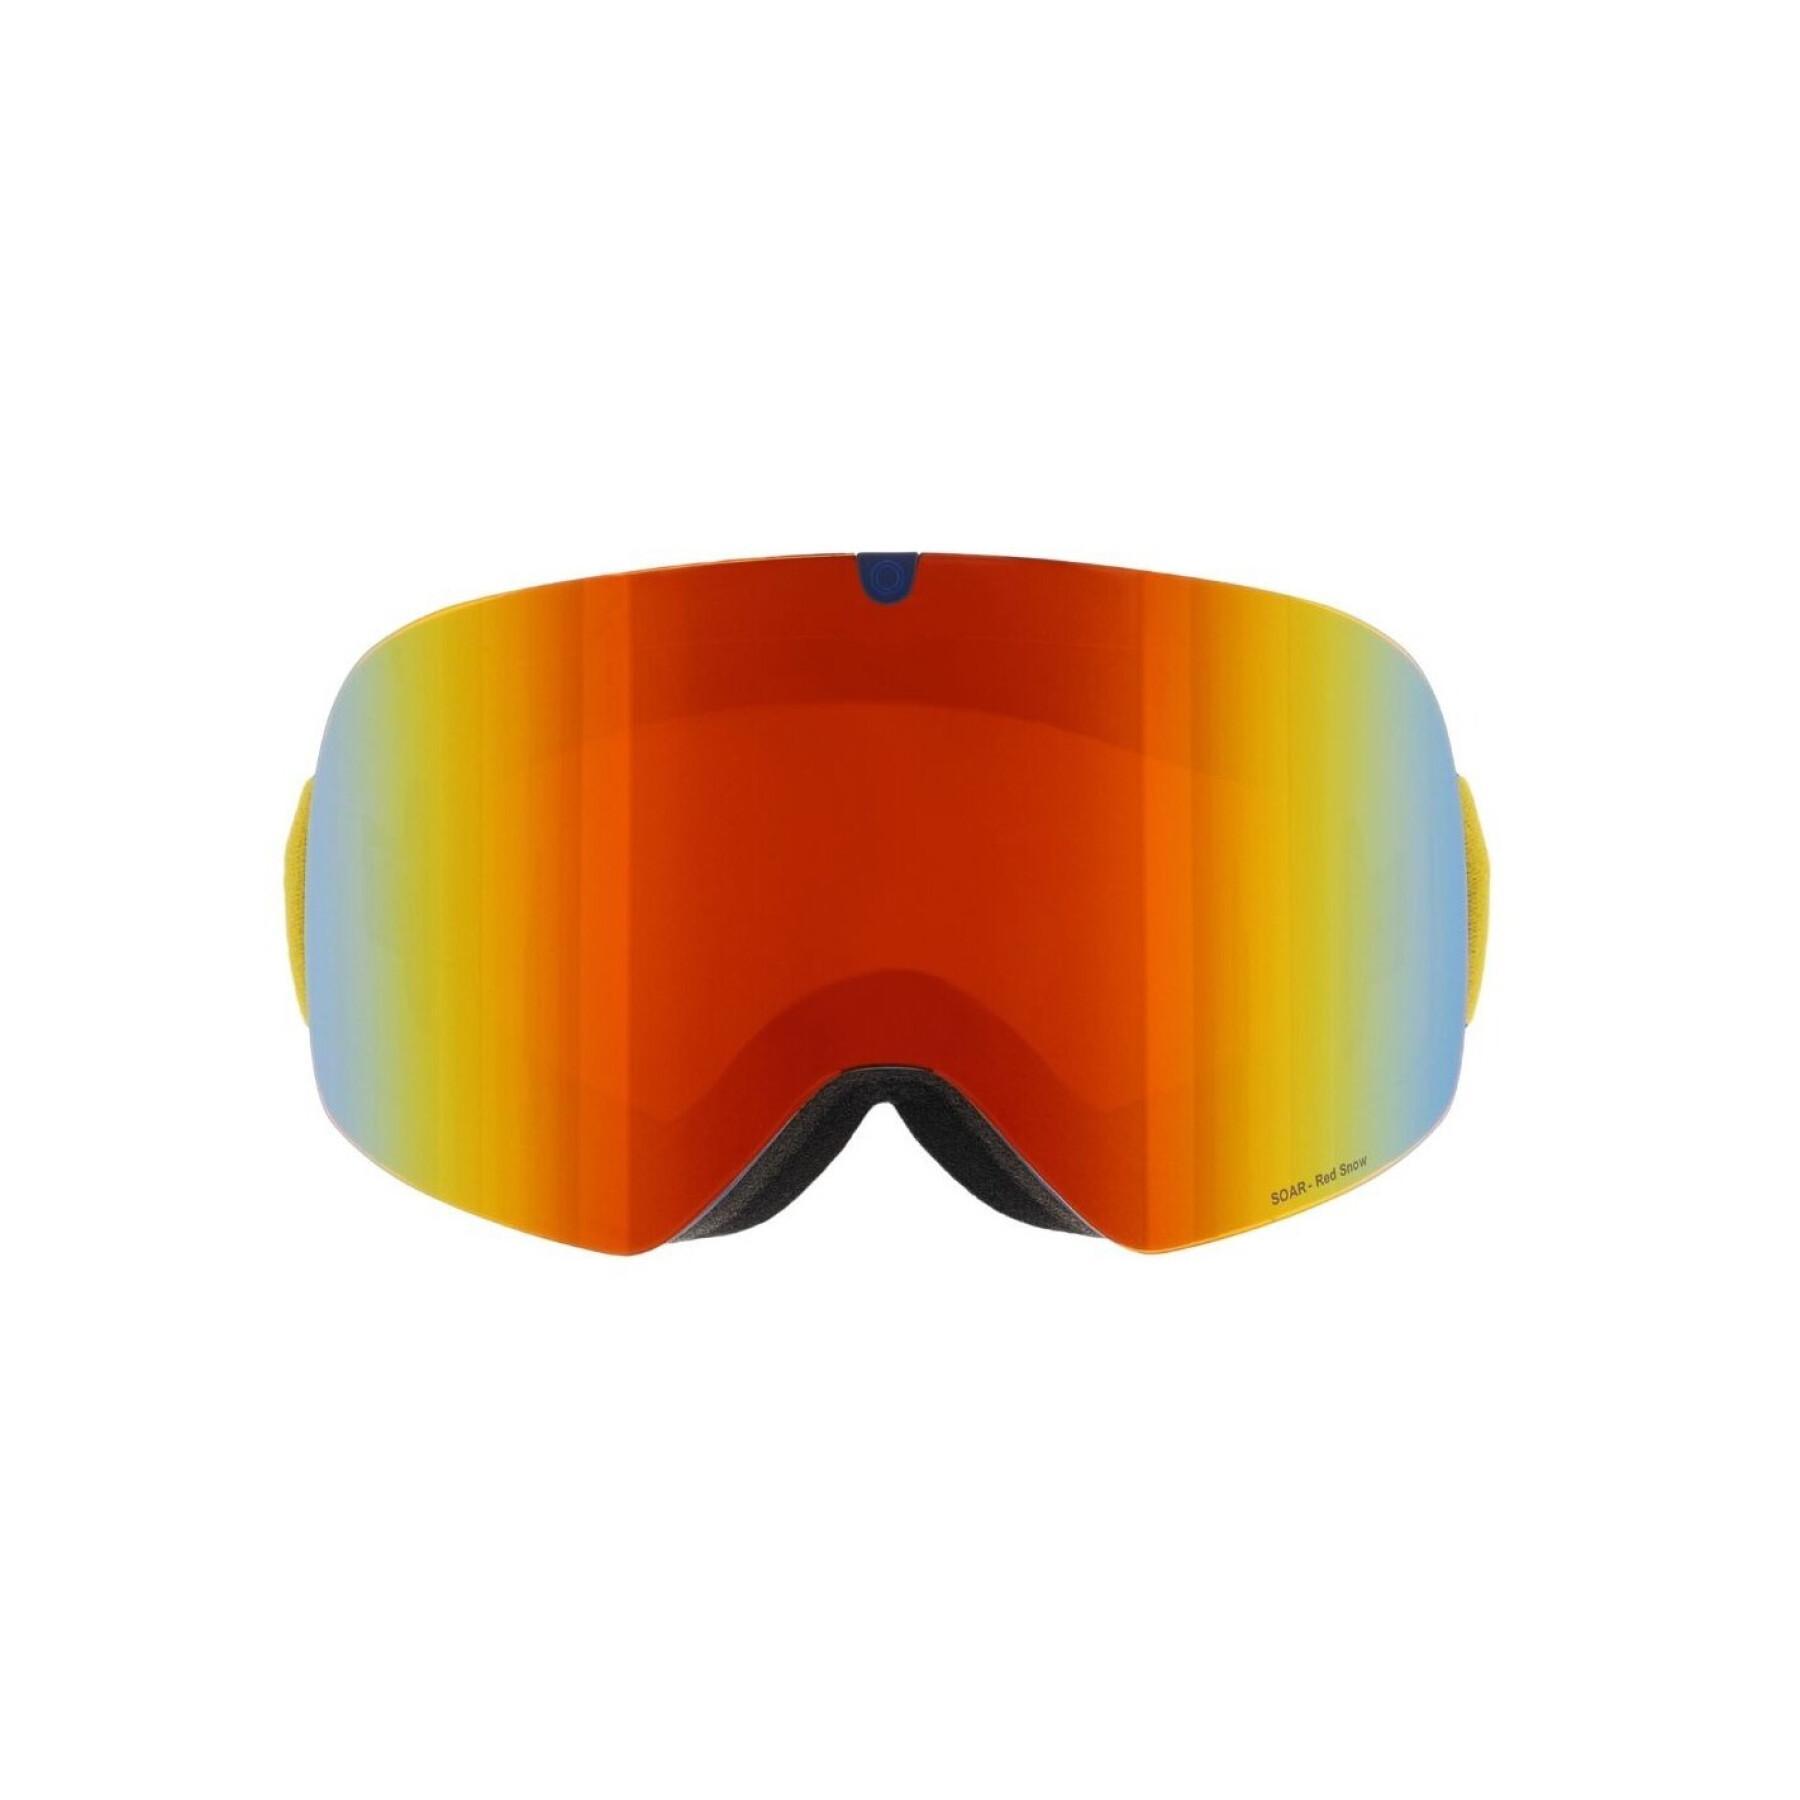 Ski mask Redbull Spect Eyewear Soar